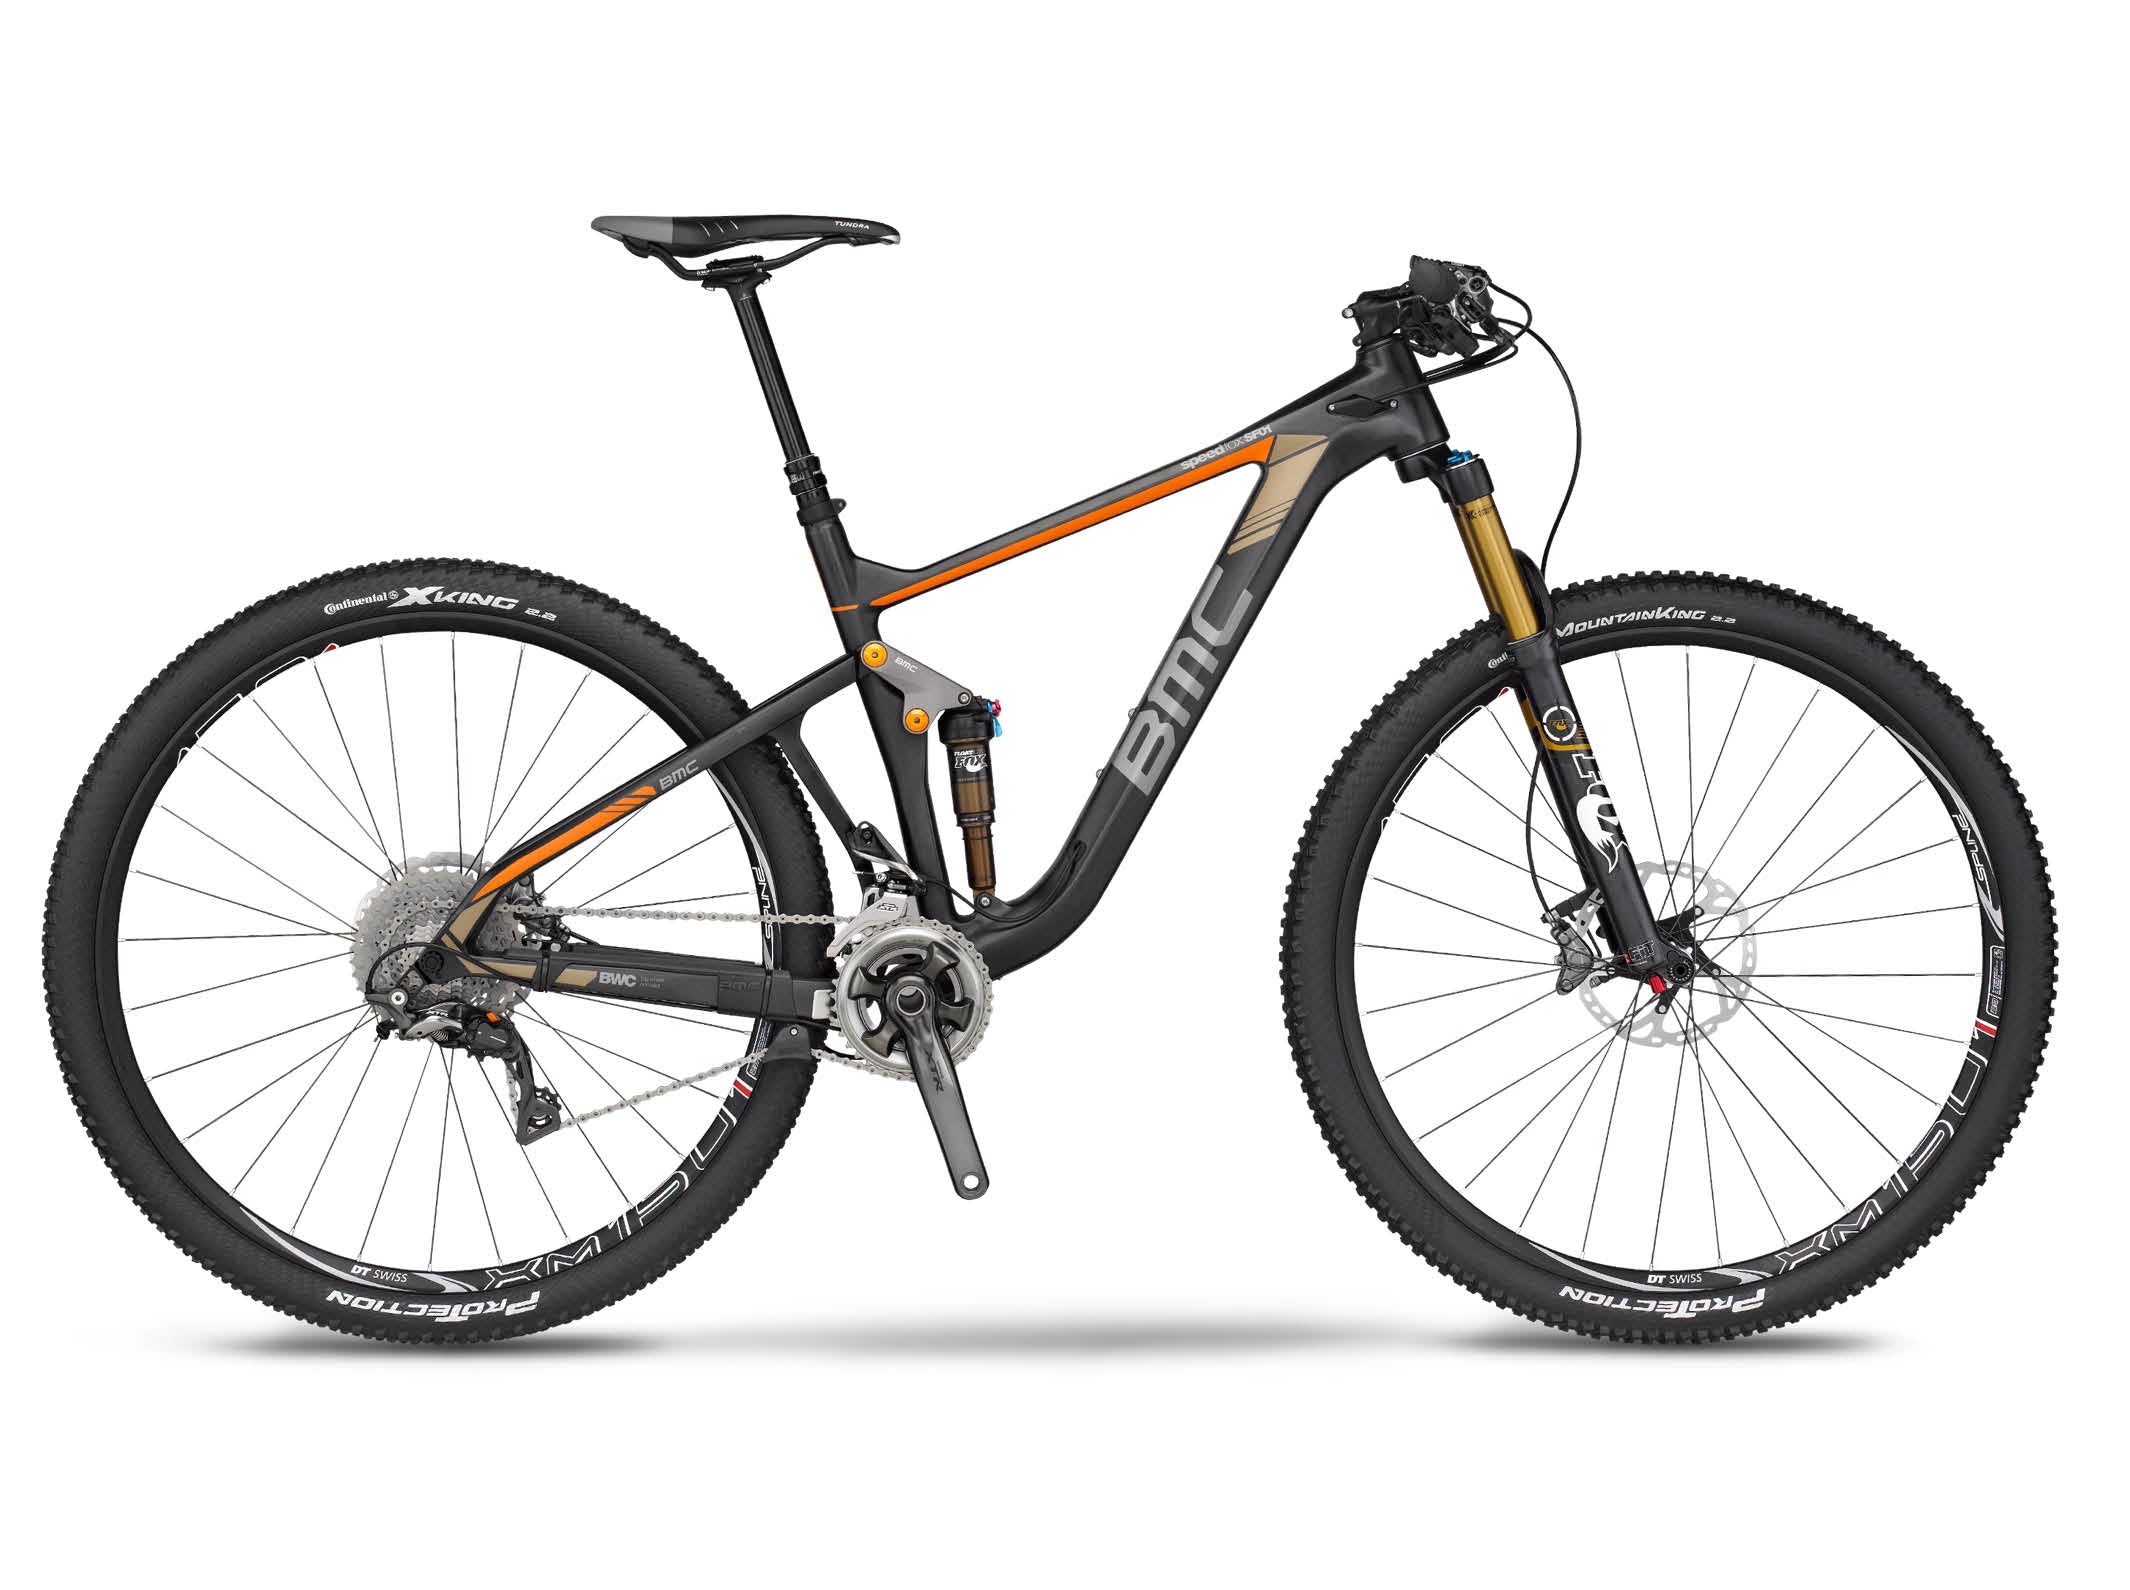 Speedfox SF01 29 XTR | BMC | bikes | Mountain, Mountain | Trail